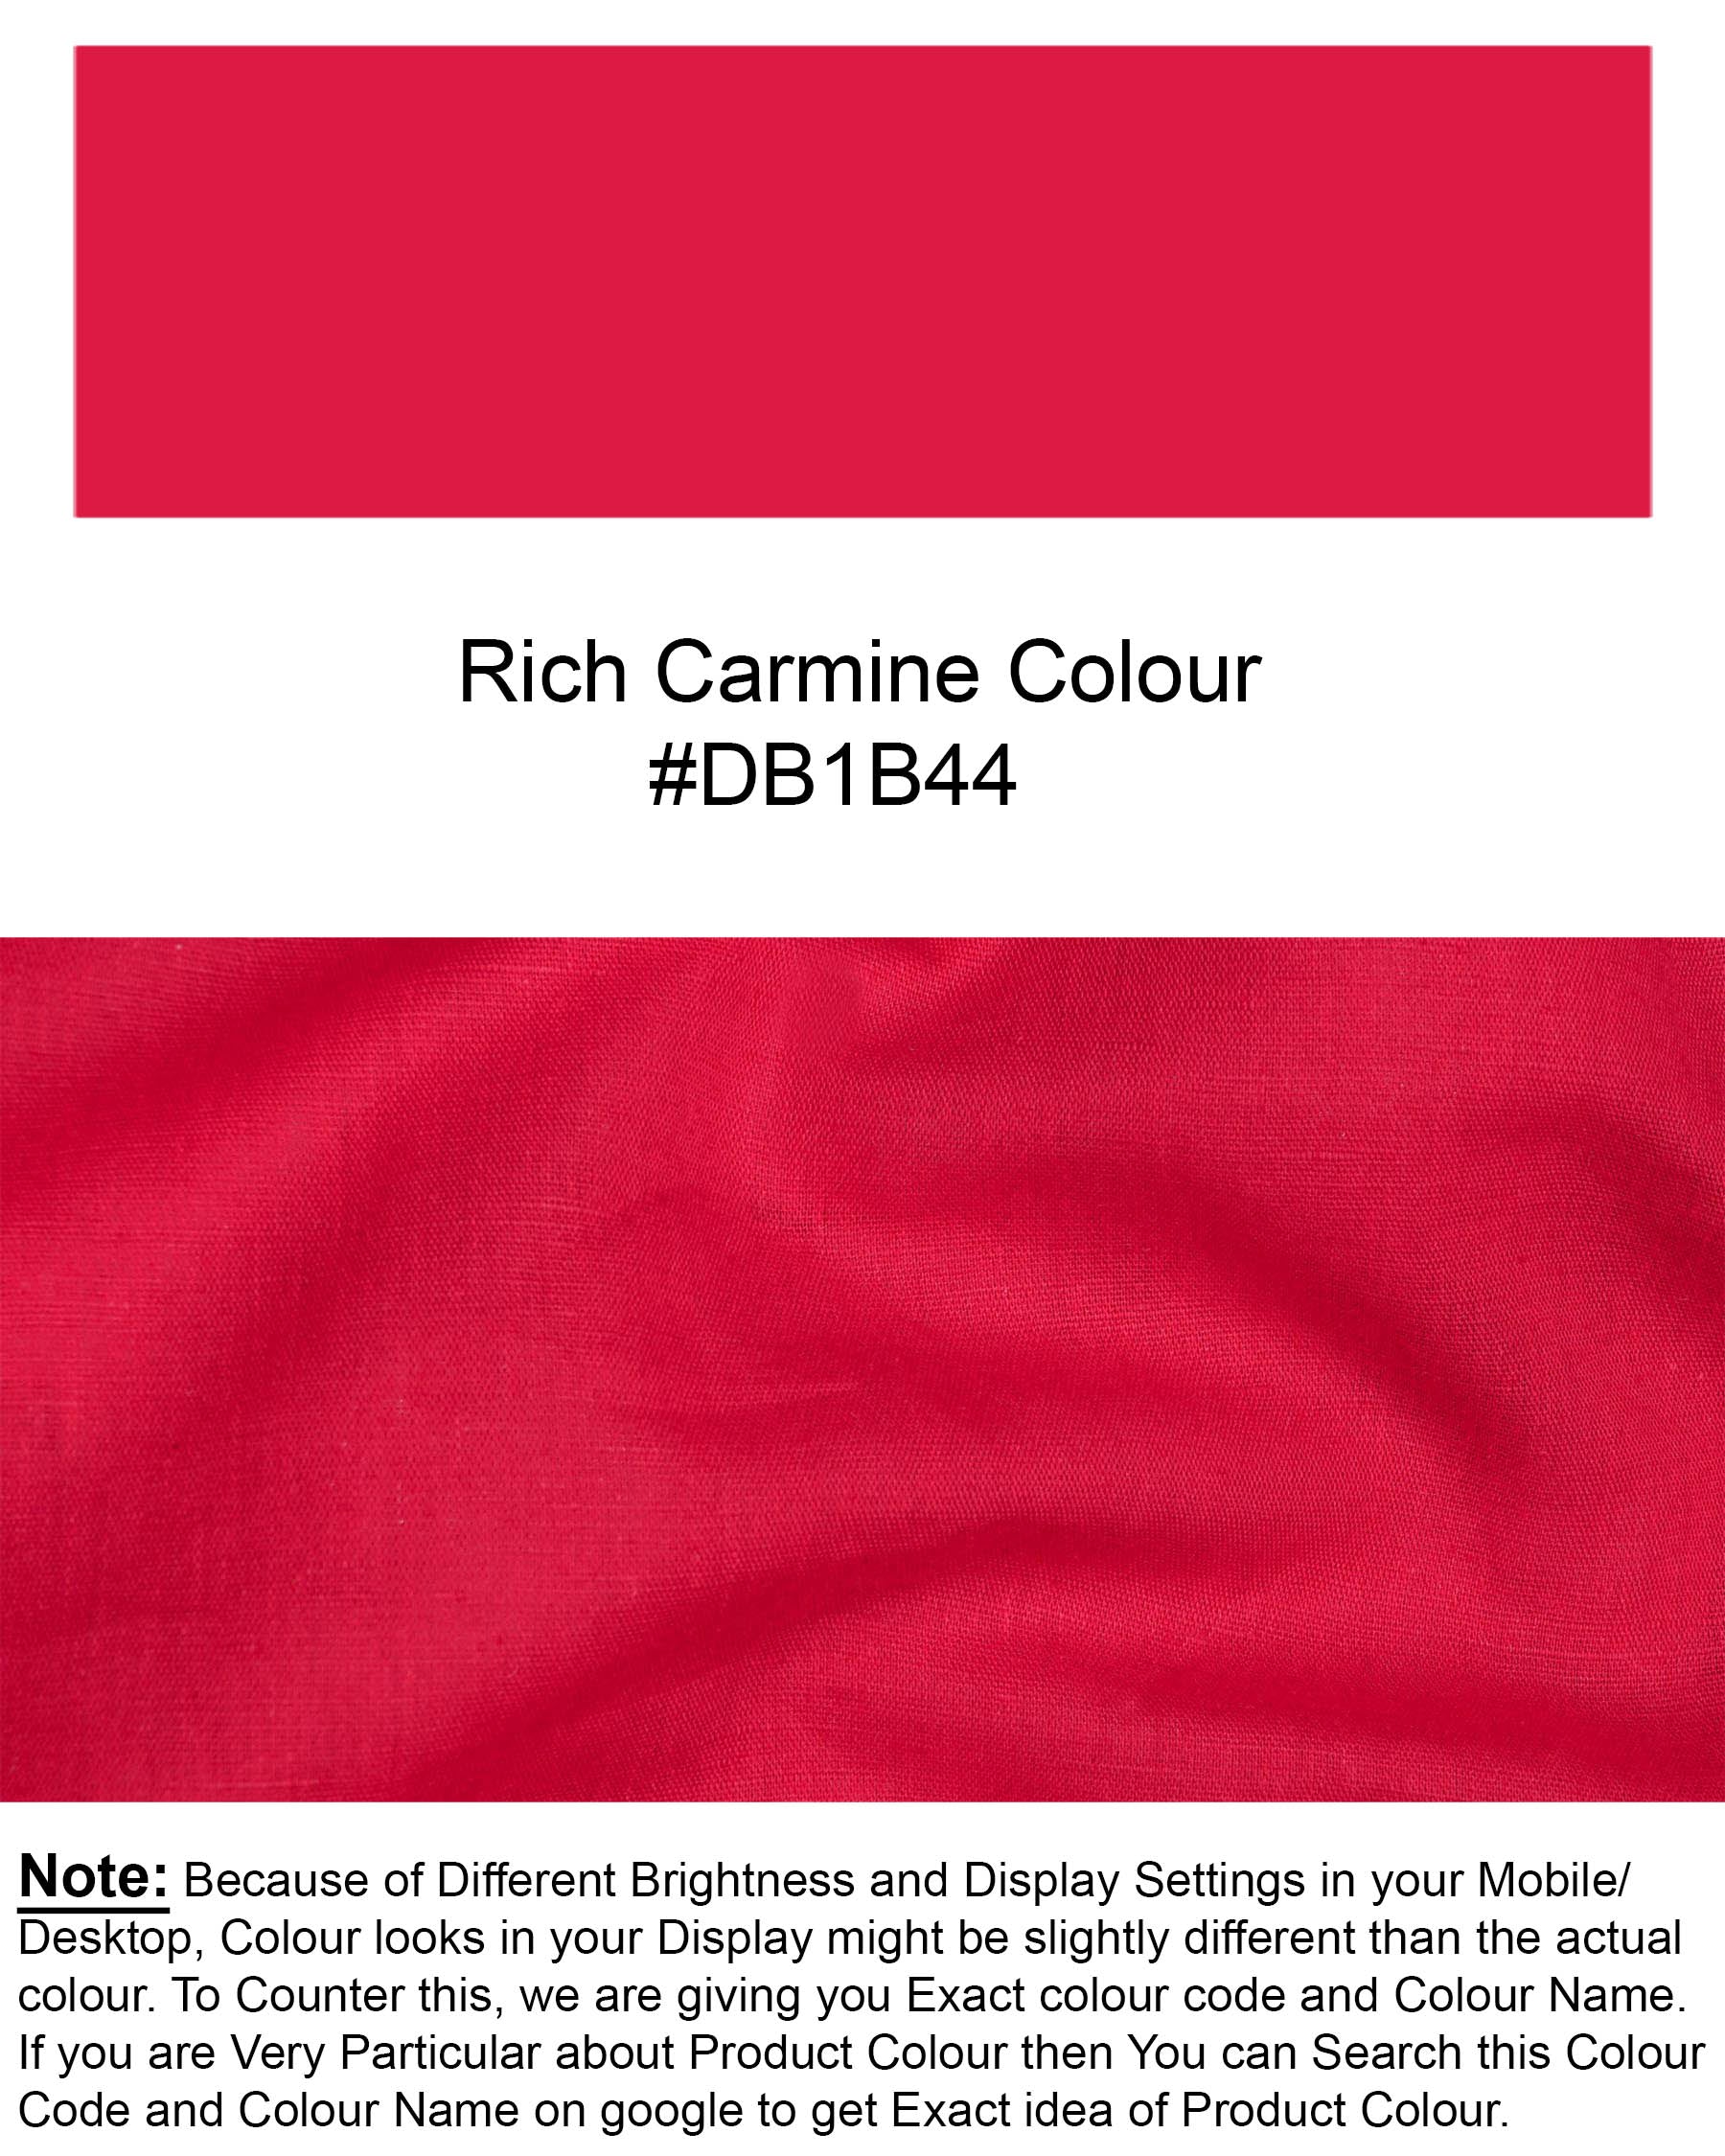 Rich Carmine Red Luxurious Linen Shirt 7523-M-P-38, 7523-M-P-H-38, 7523-M-P-39, 7523-M-P-H-39, 7523-M-P-40, 7523-M-P-H-40, 7523-M-P-42, 7523-M-P-H-42, 7523-M-P-44, 7523-M-P-H-44, 7523-M-P-46, 7523-M-P-H-46, 7523-M-P-48, 7523-M-P-H-48, 7523-M-P-50, 7523-M-P-H-50, 7523-M-P-52, 7523-M-P-H-52